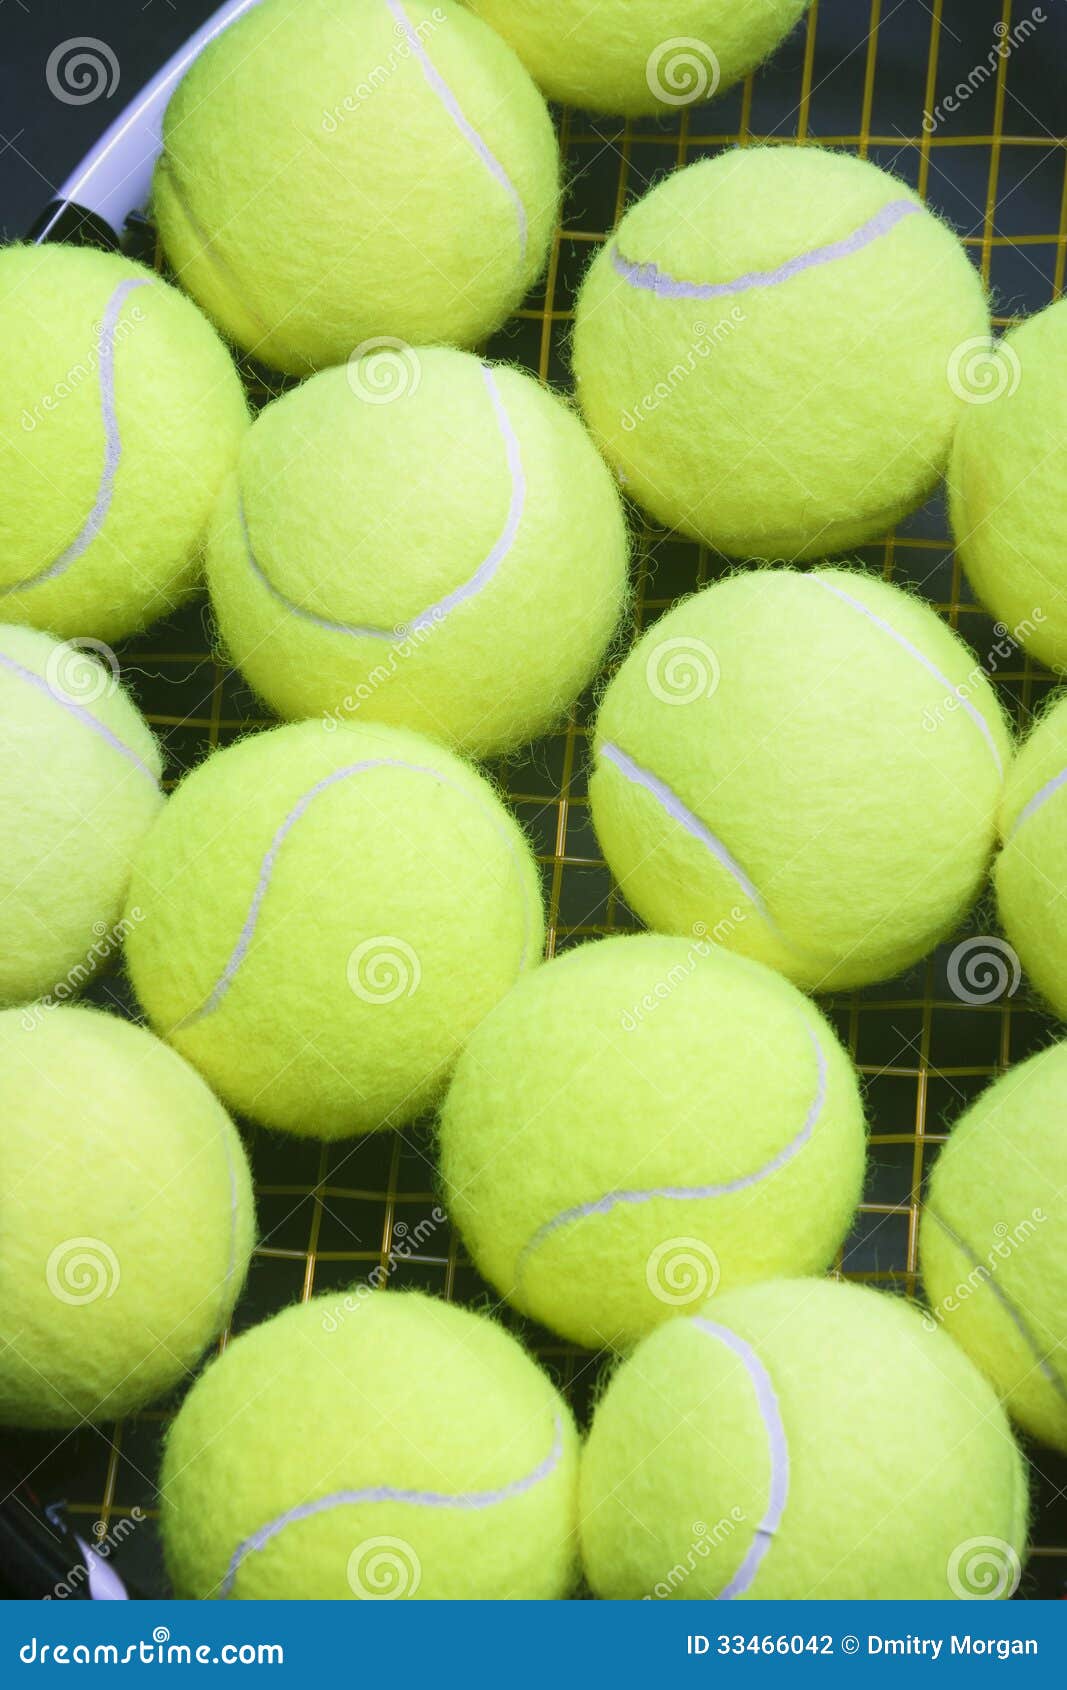 plenty of tennis balls on raquet strings